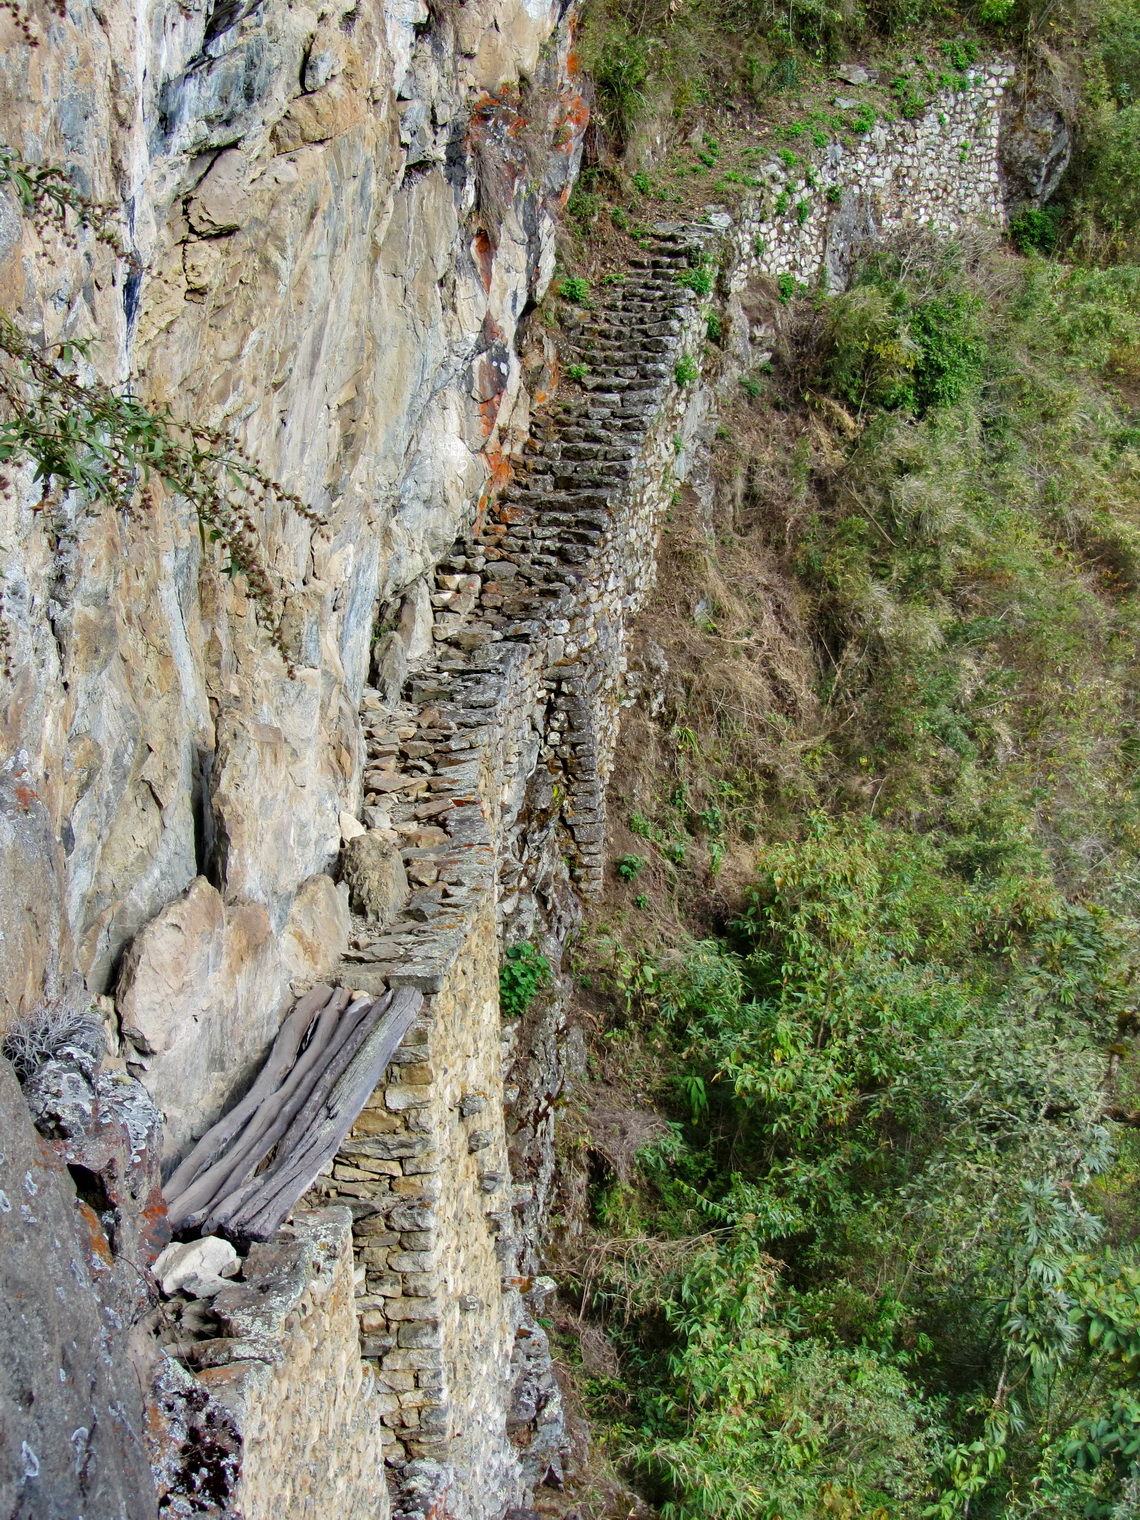 The Inca drawbridge